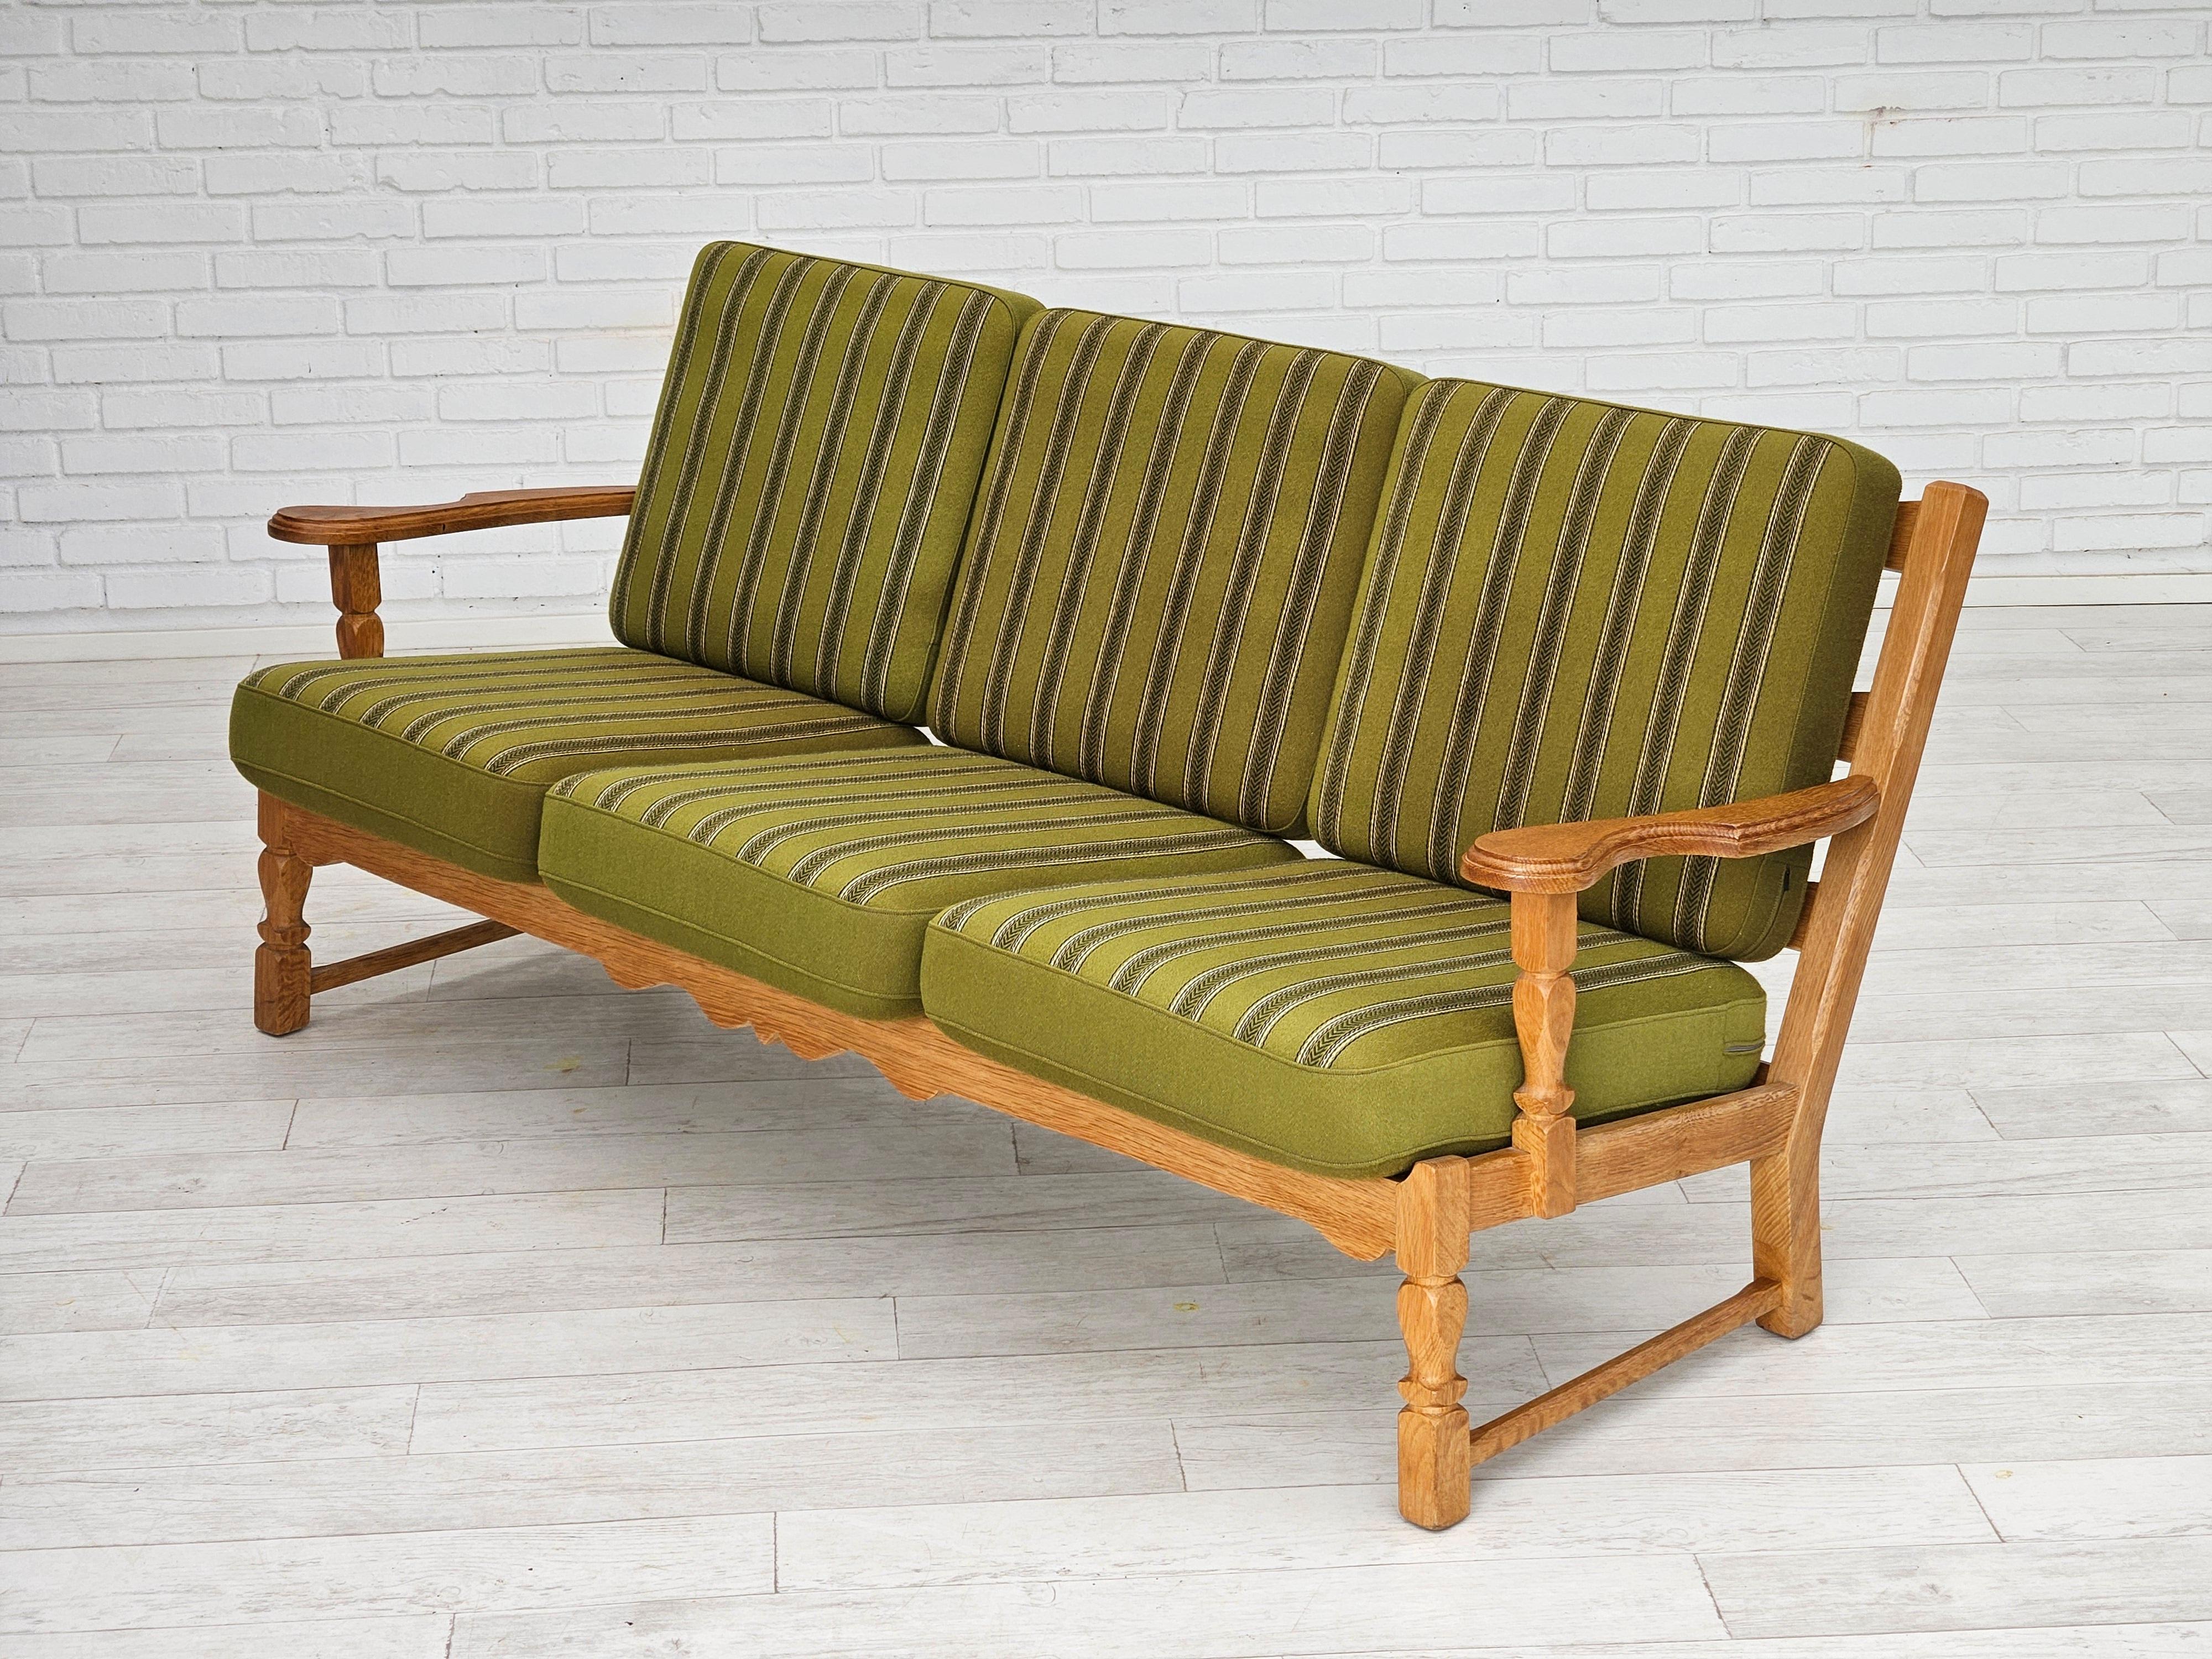 1970s, Danish design, 3 seater sofa, original condition, solid oak wood, furni For Sale 4